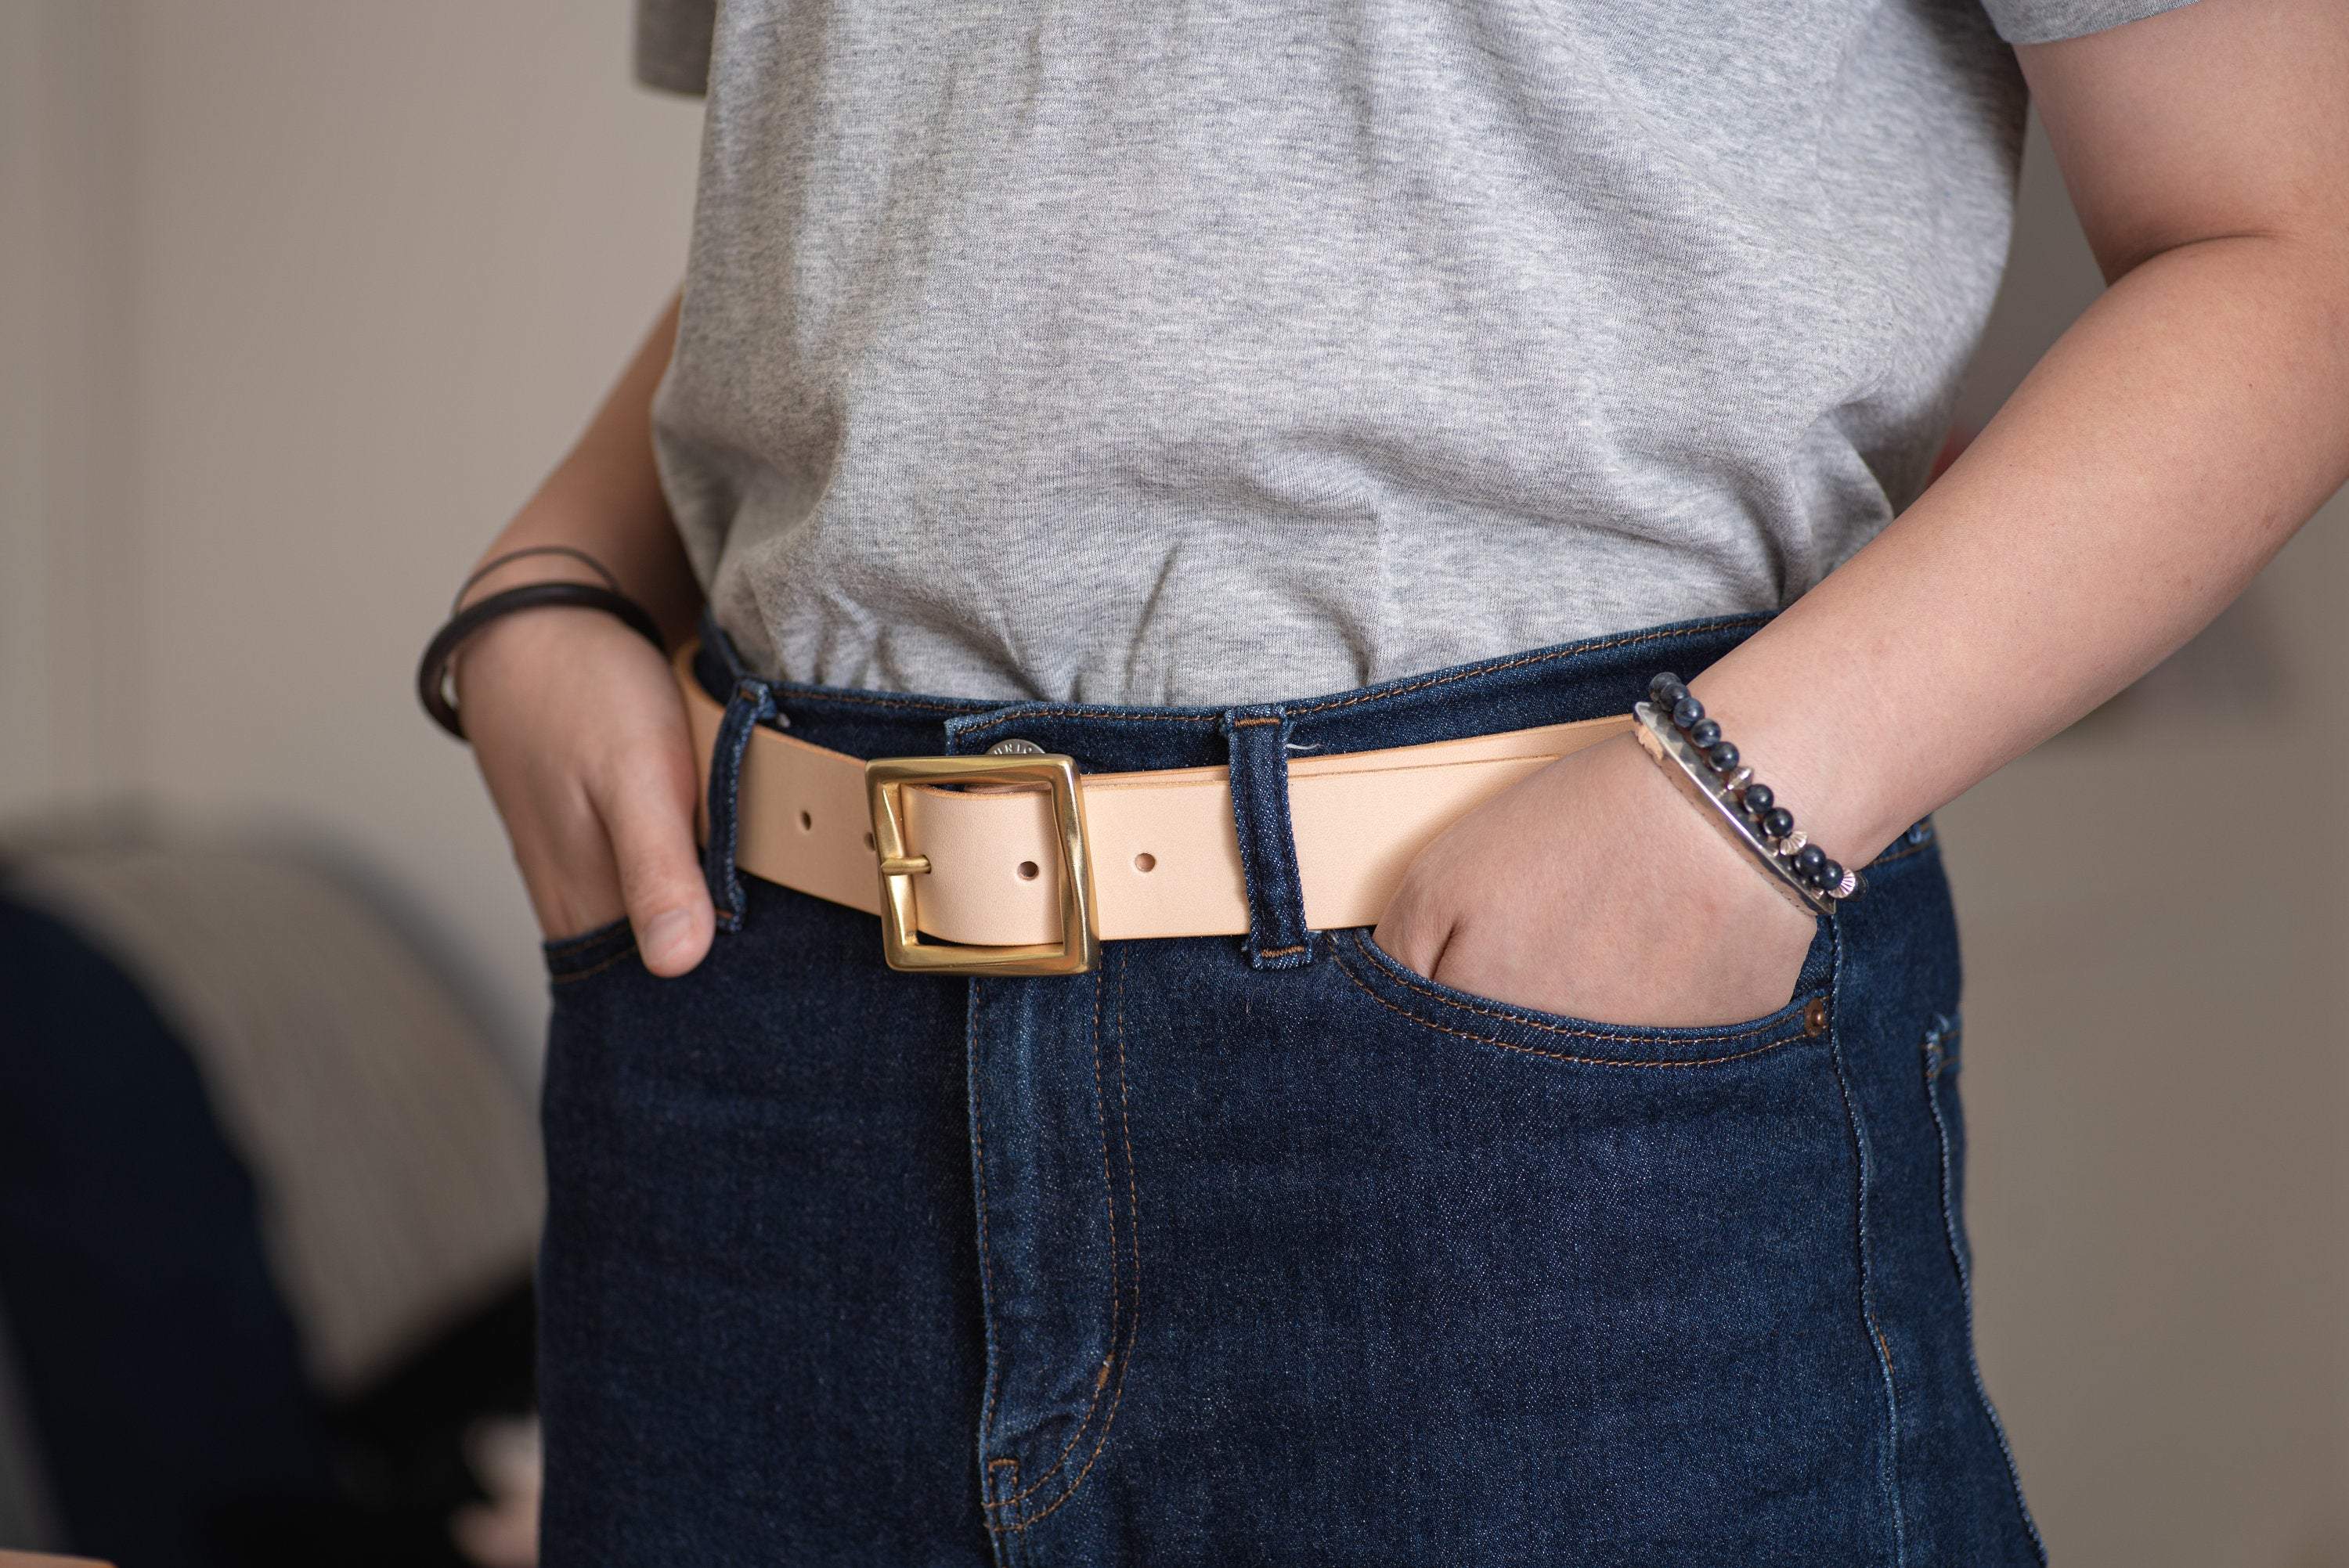 1.75 inch Leather Jean Belt